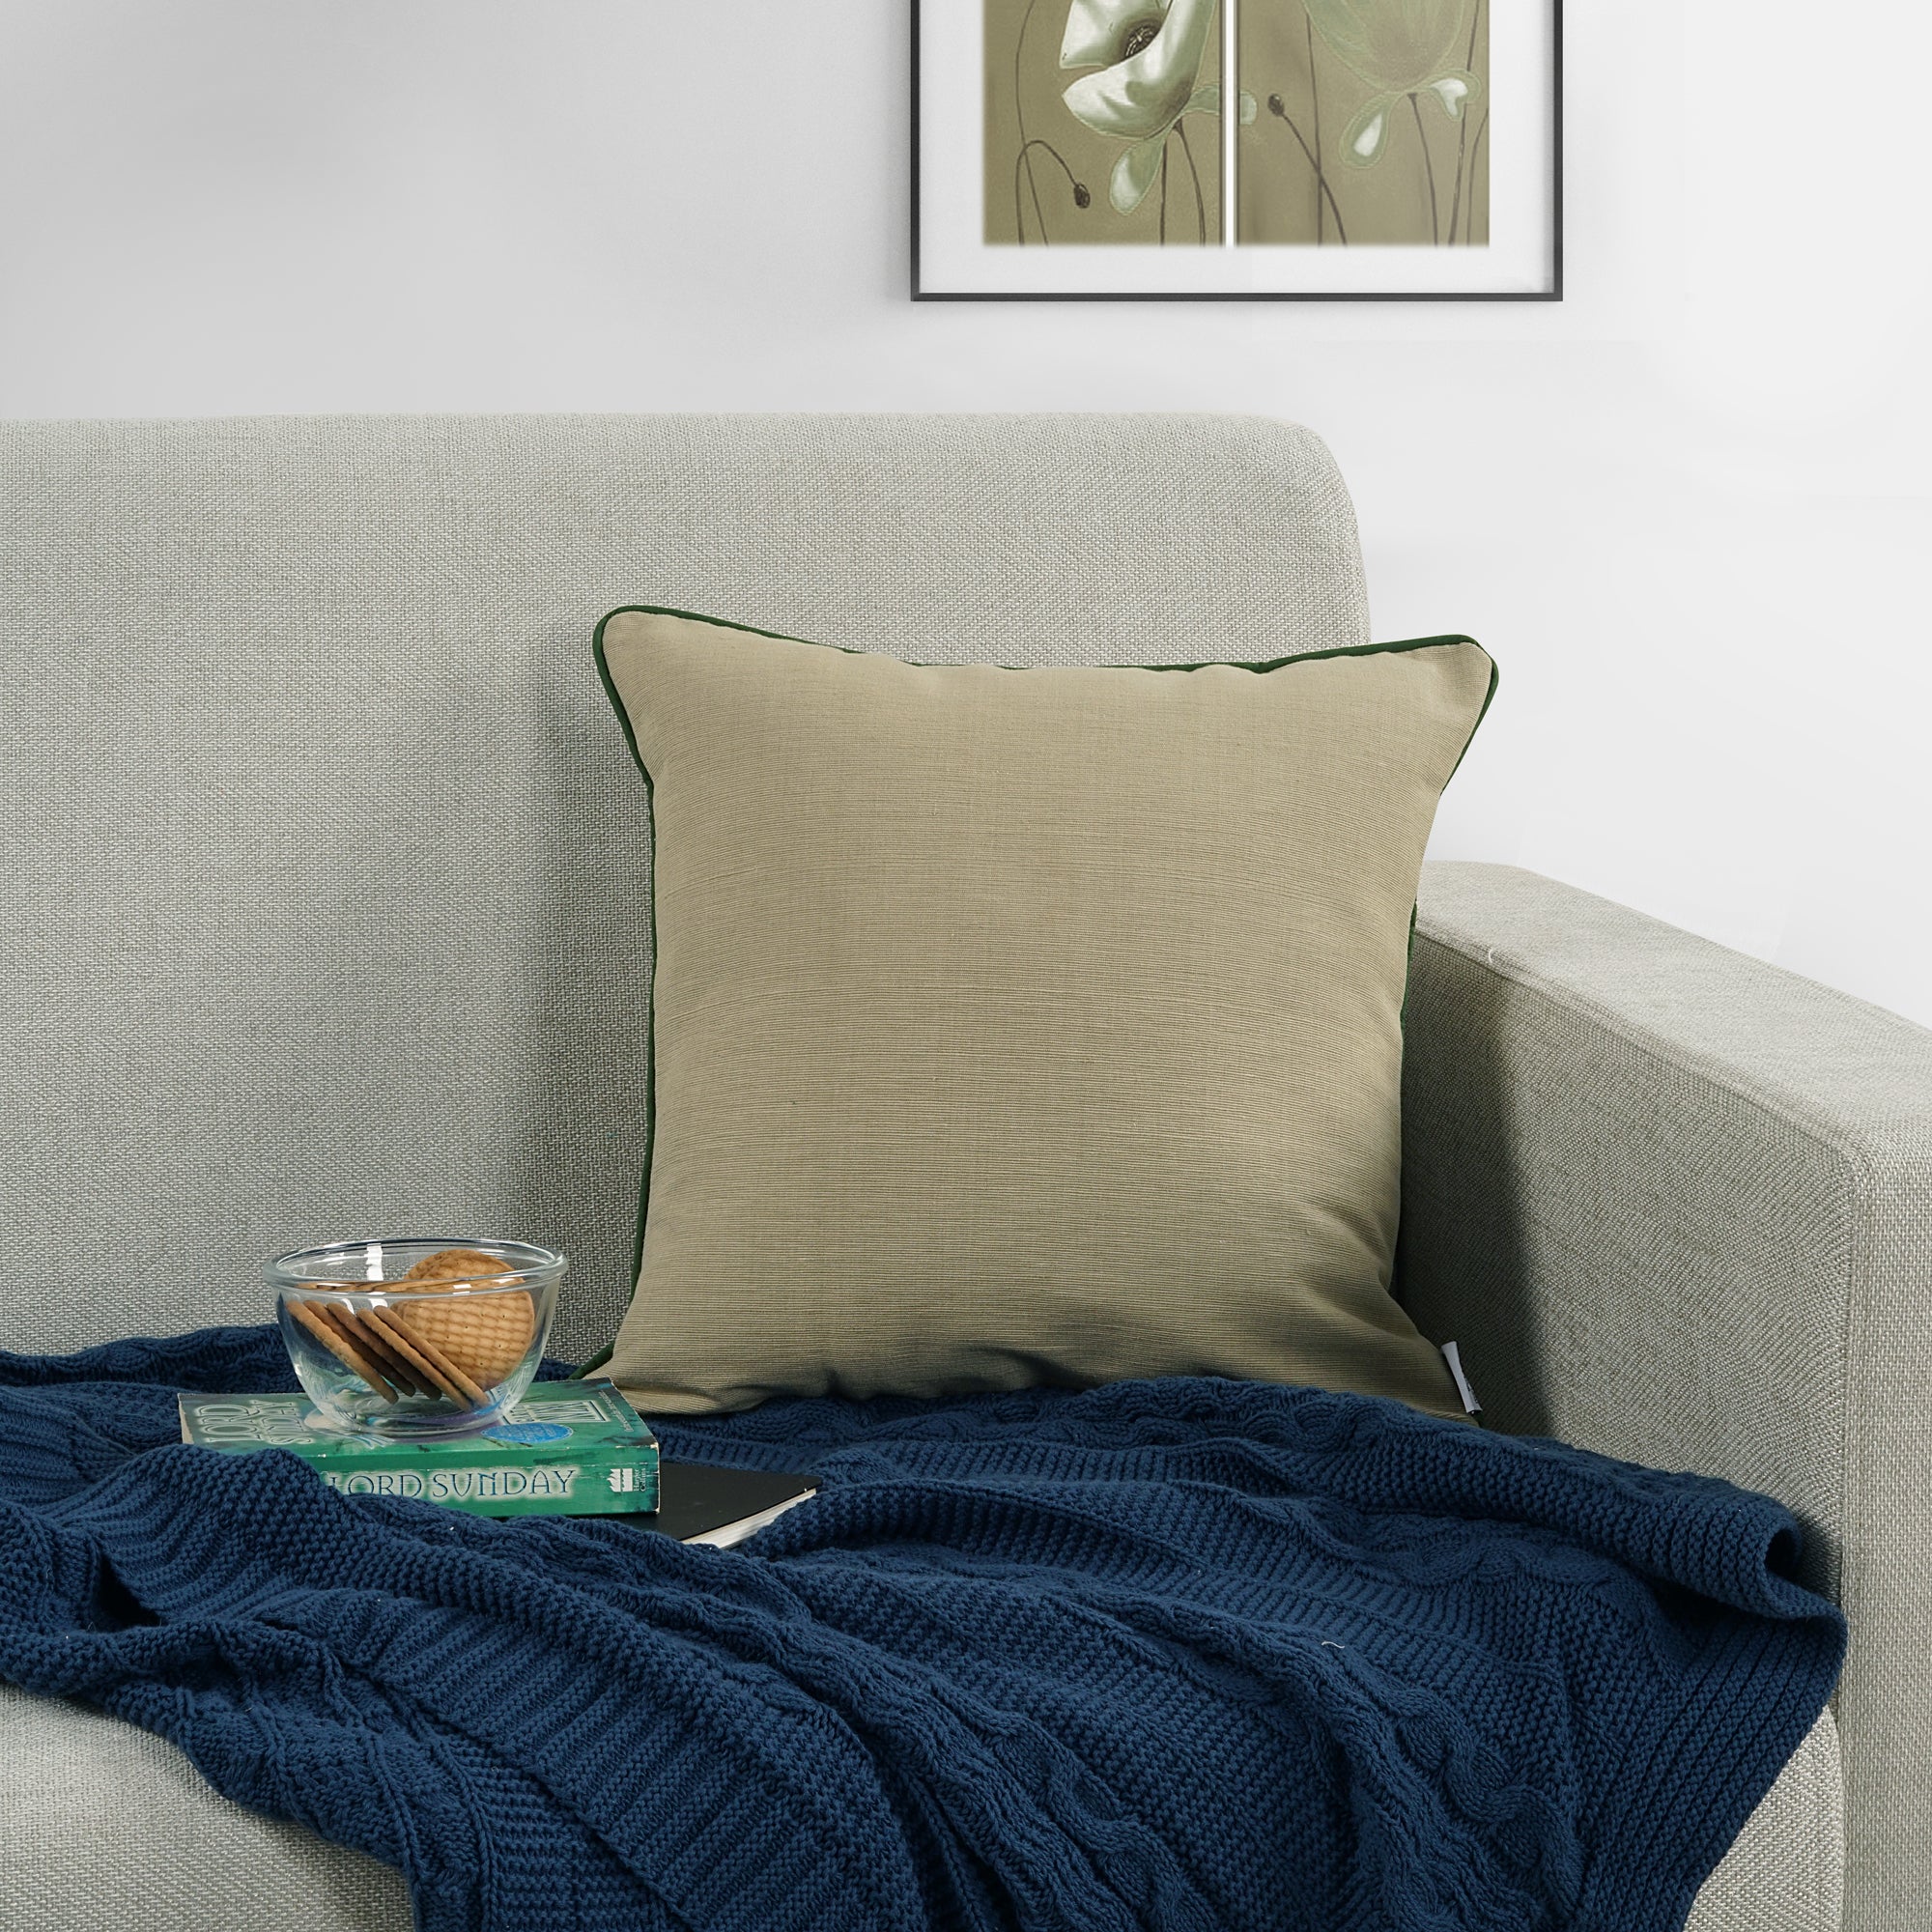 Soft Woven Corded Stripe Cotton Cushion Cover Set in Khaki online (1Pc)